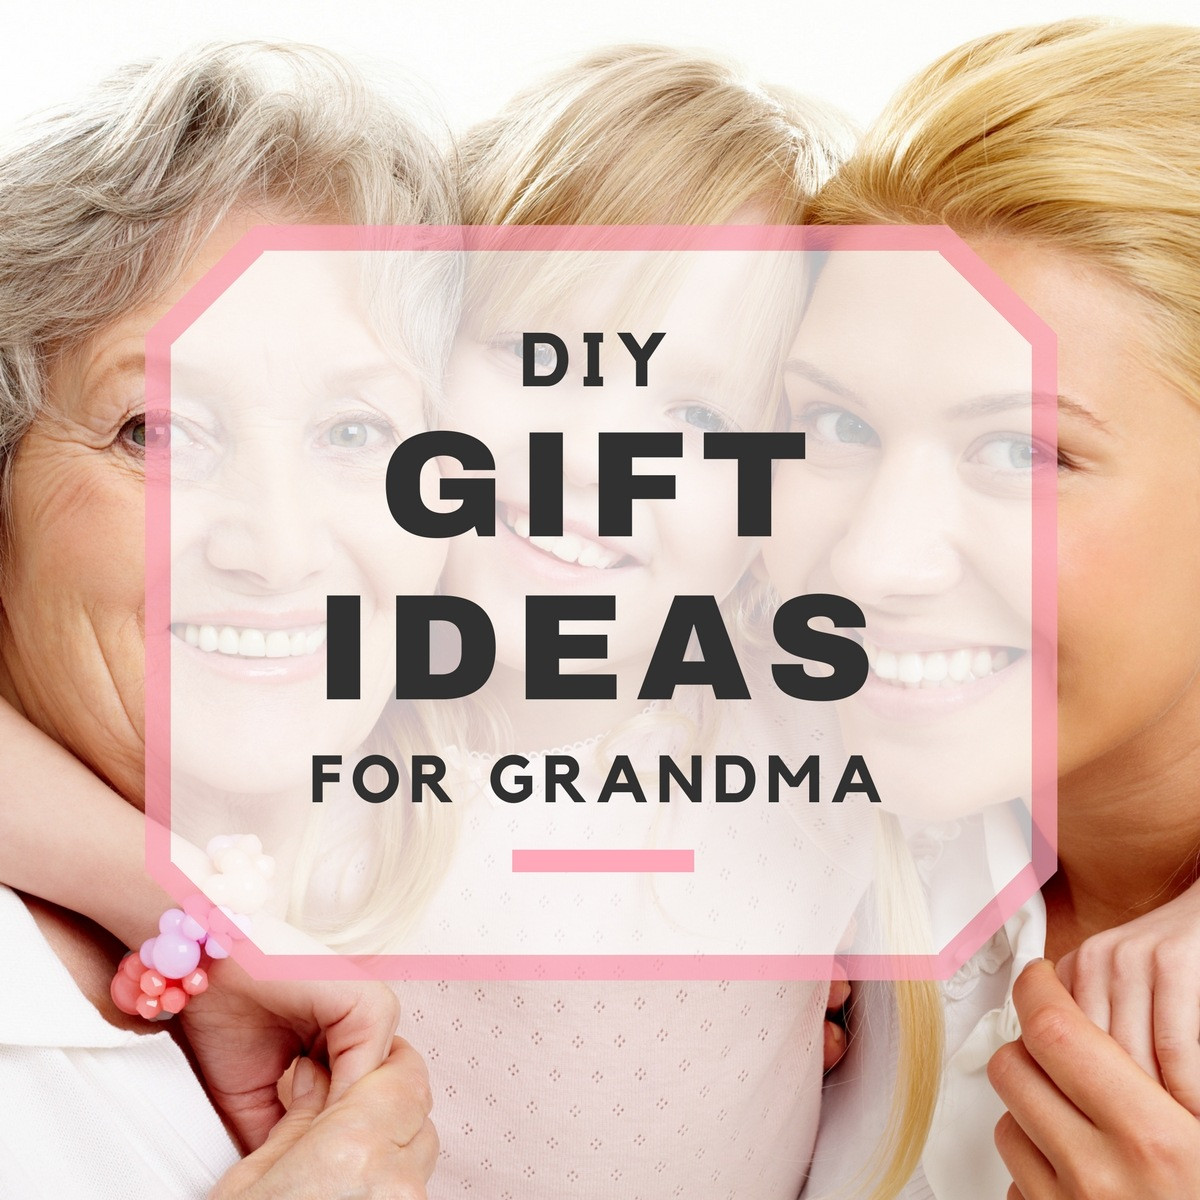 DIY Grandma Gifts
 DIY Gift Ideas for Grandma